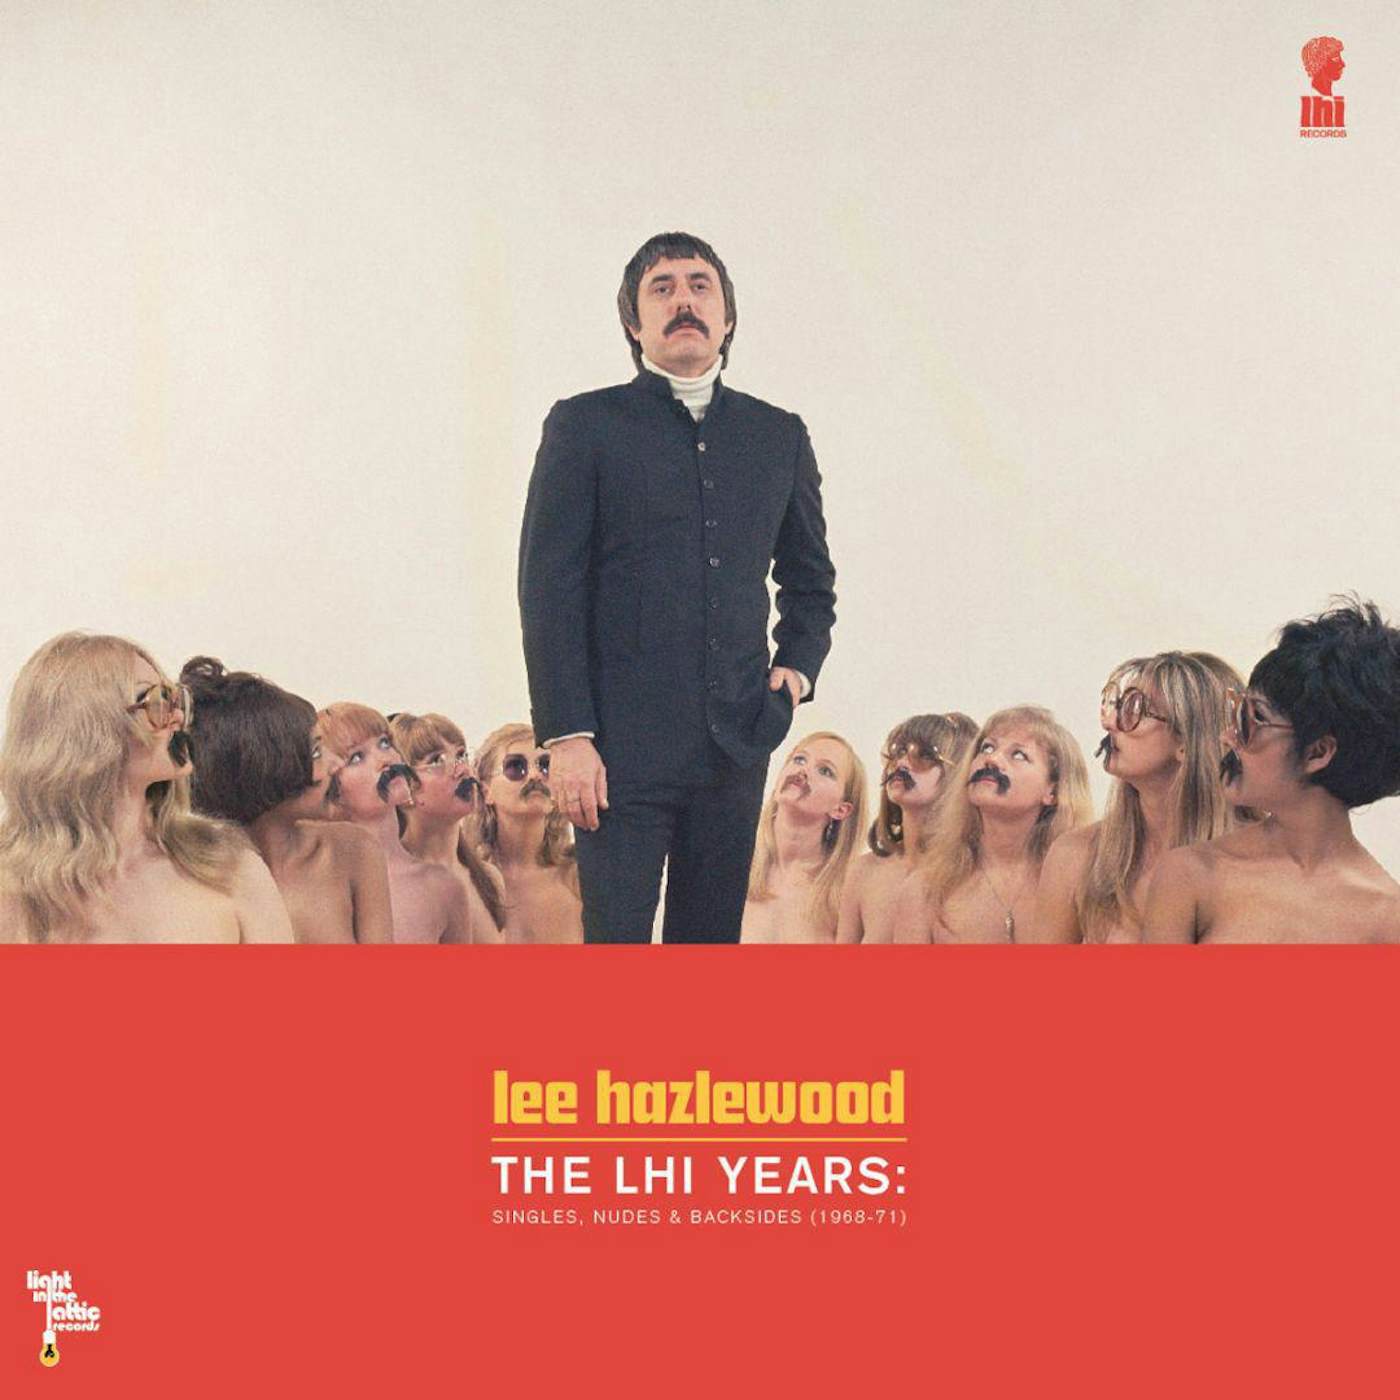 Lee Hazlewood - The Lhi Years: Singles, Nudes, & Backsides (1968-71) (2LP) Vinyl Record